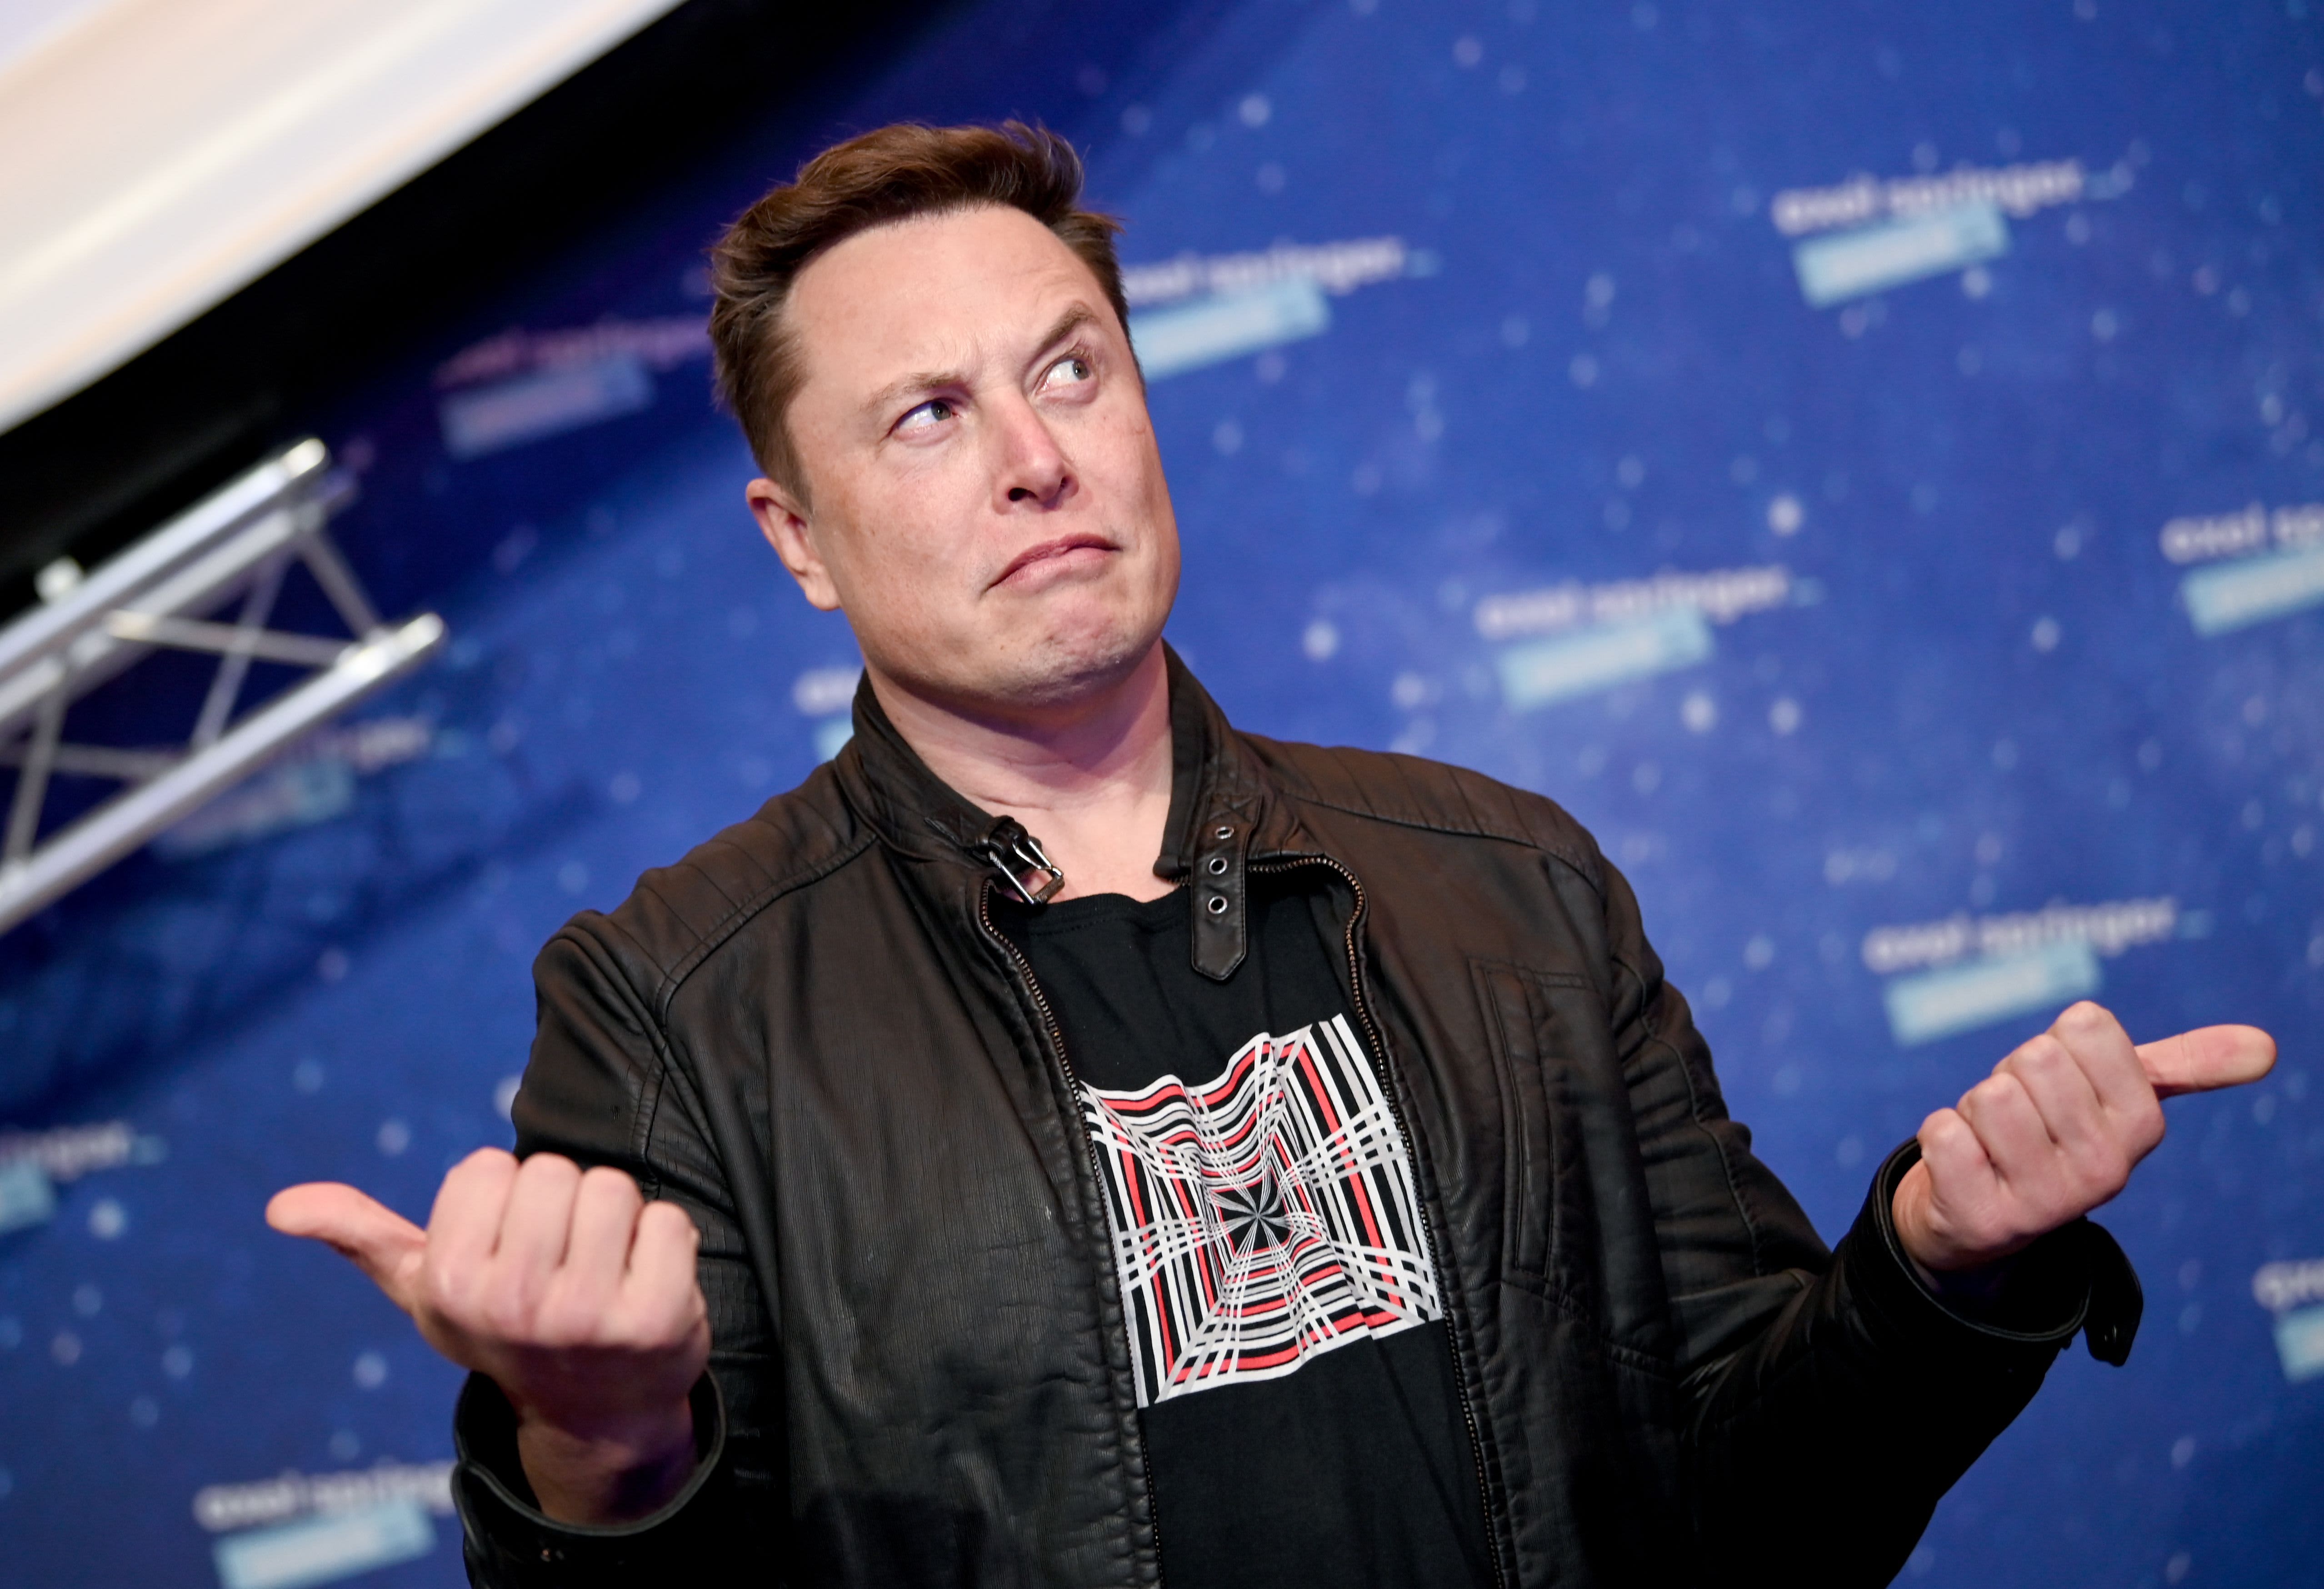 Dogon Elon Musk tweets disconcertingly, says Bull Cart Nic Nic